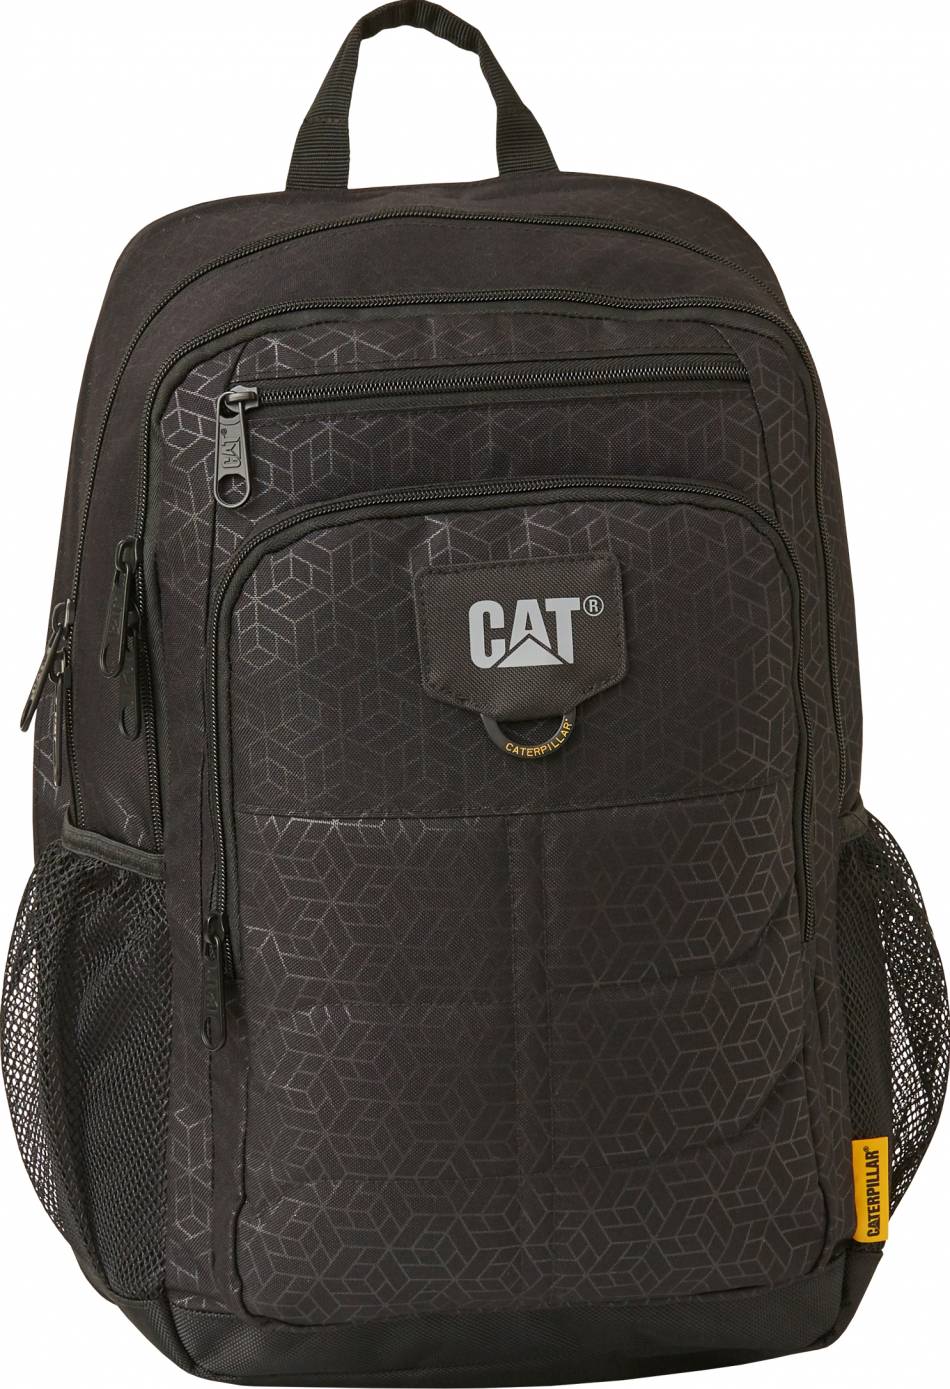 Cat® Bags - PEORIA BACKPACK TROLLEY - Wheeled Backpack